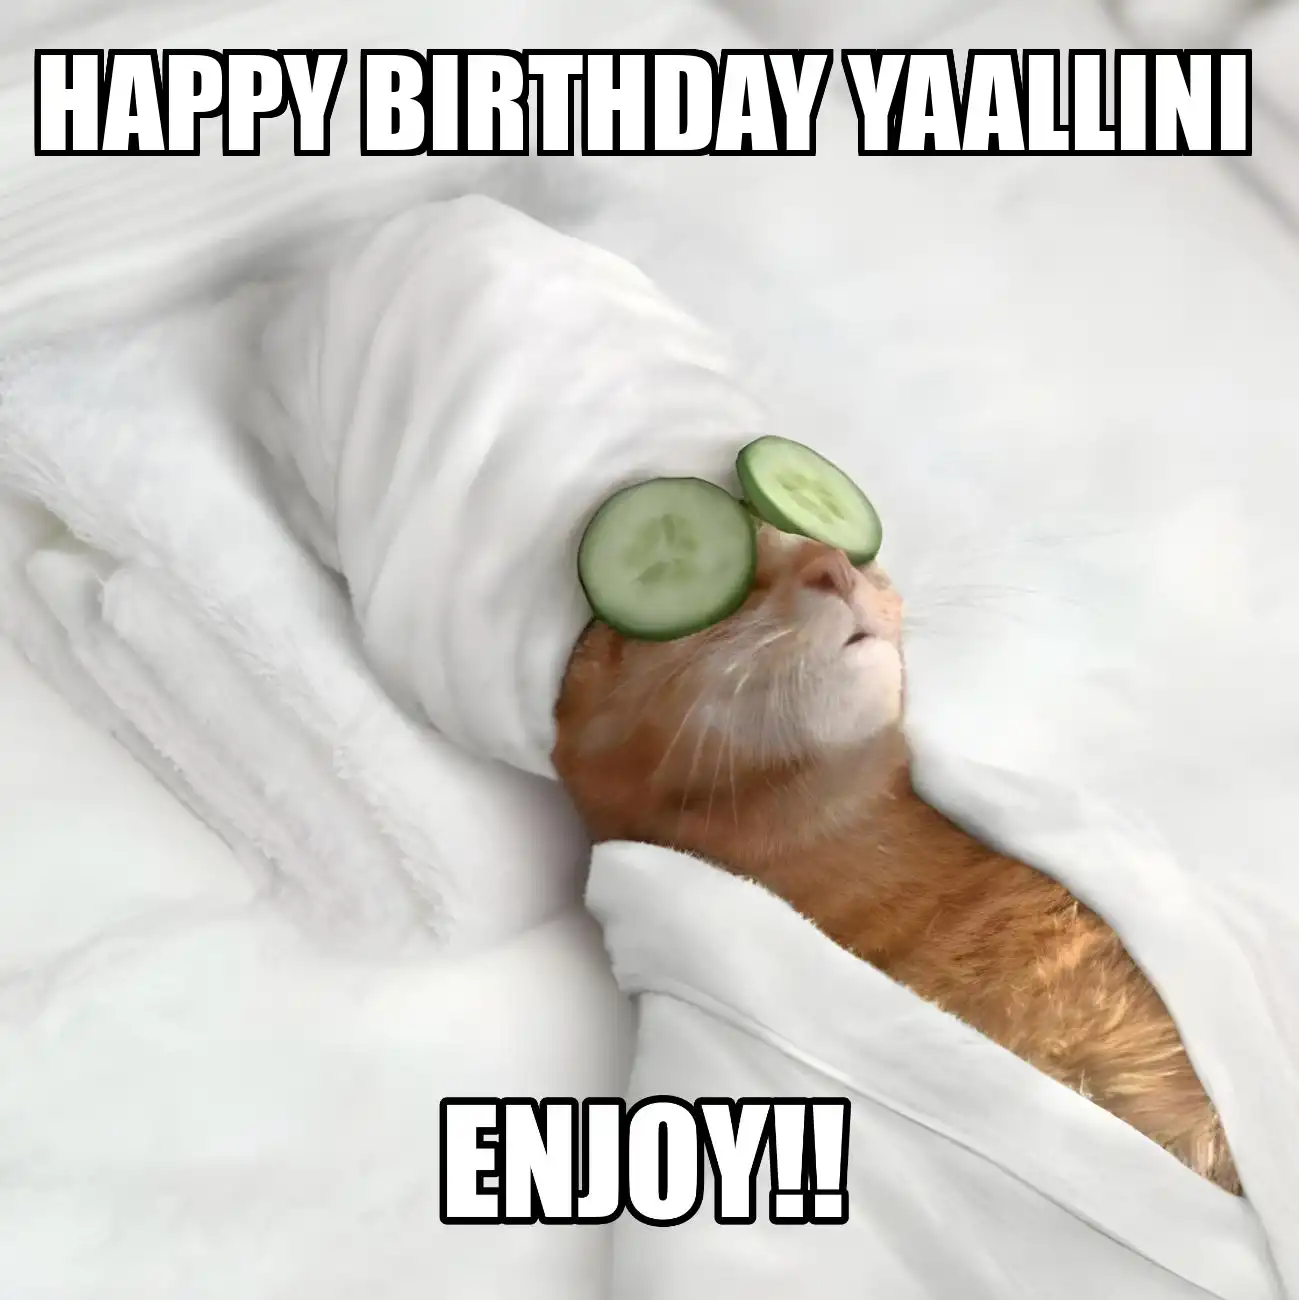 Happy Birthday Yaallini Enjoy Cat Meme